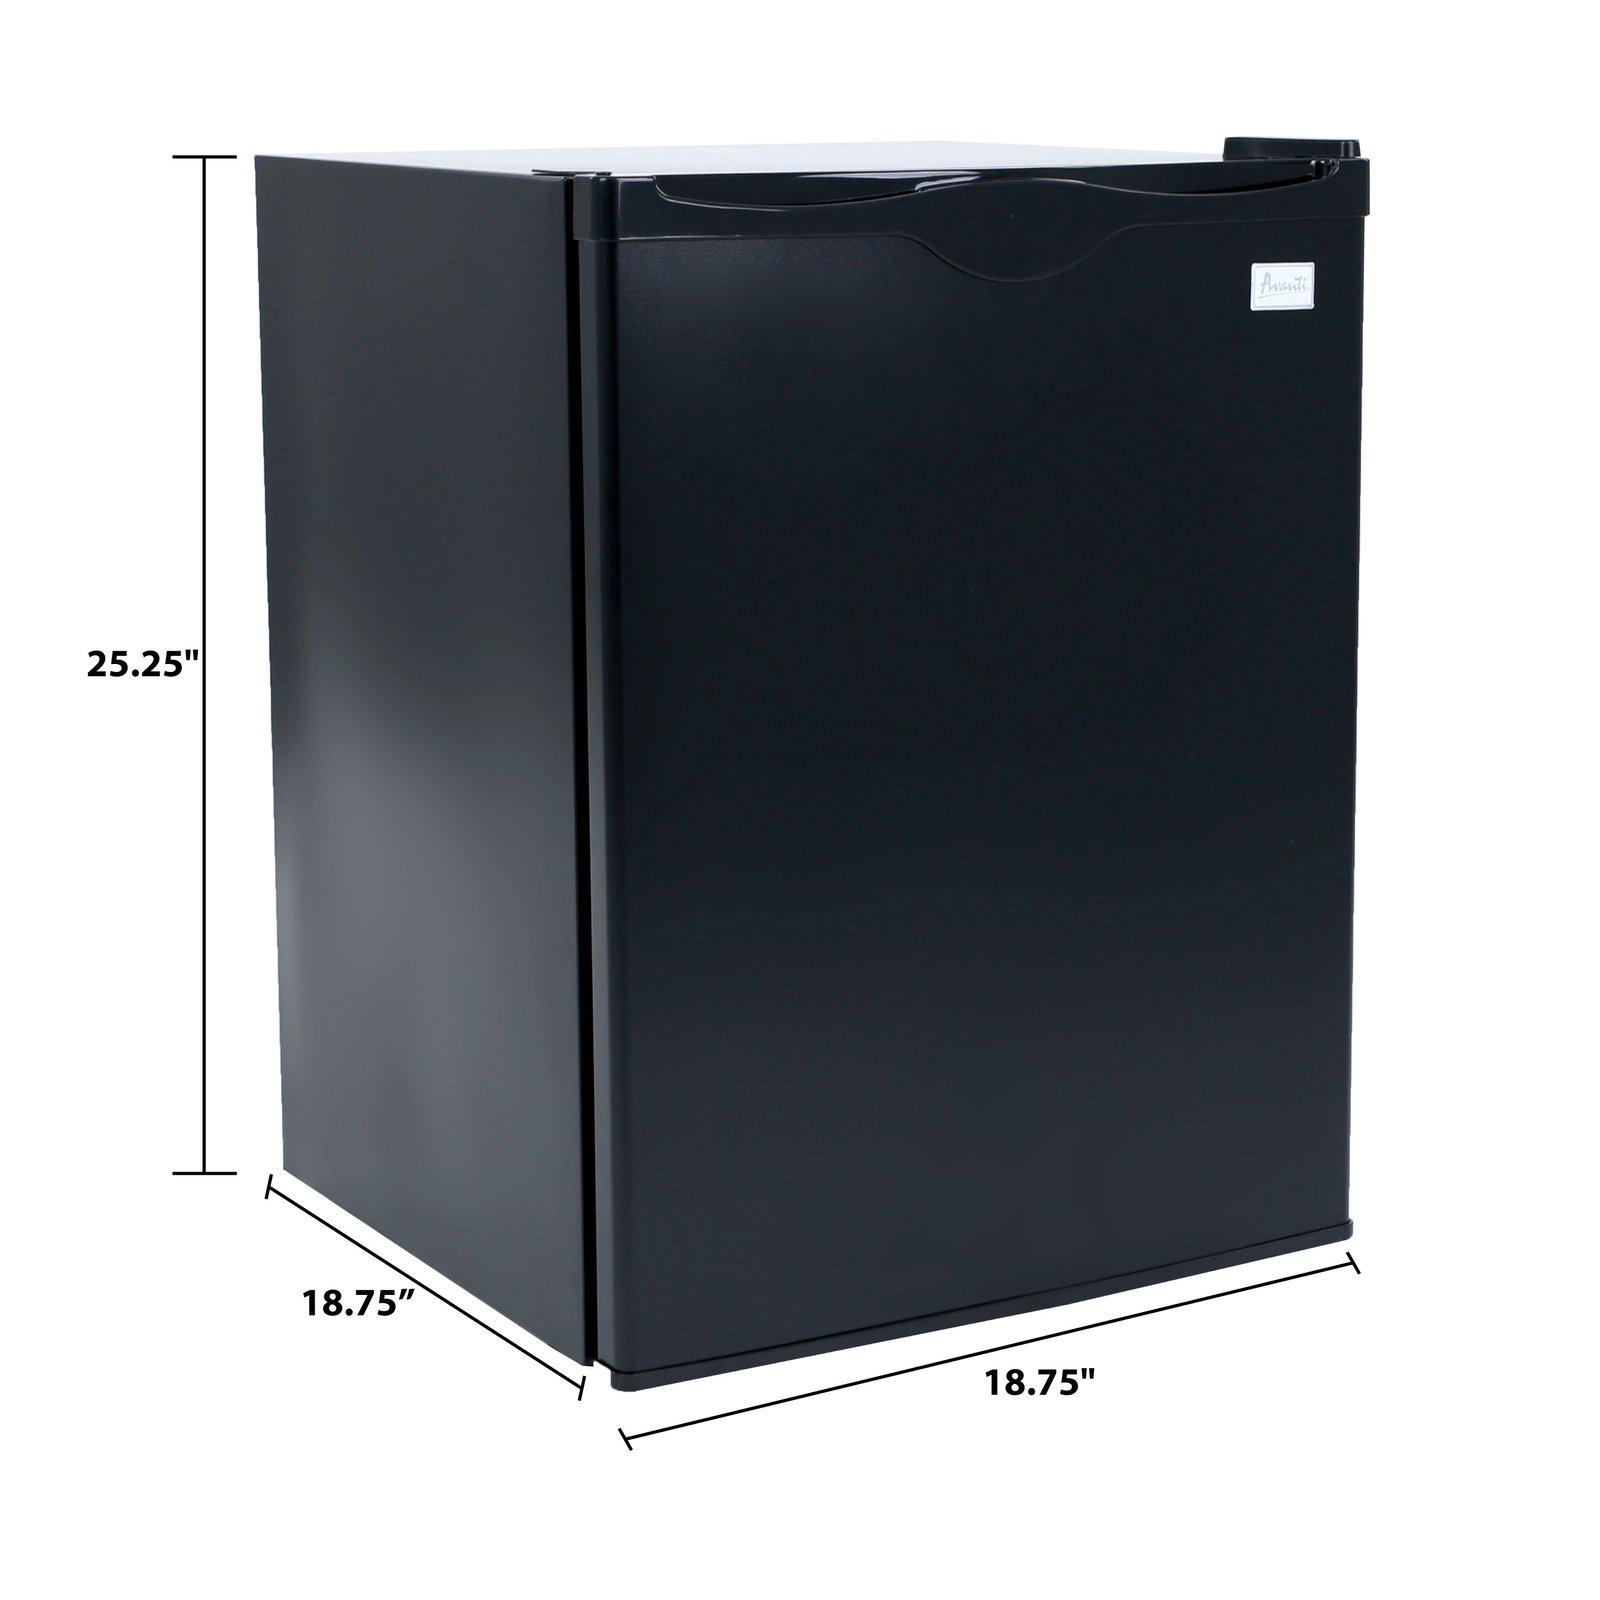 AVANTI AR2416B 2.2 cu. ft. Compact Refrigerator